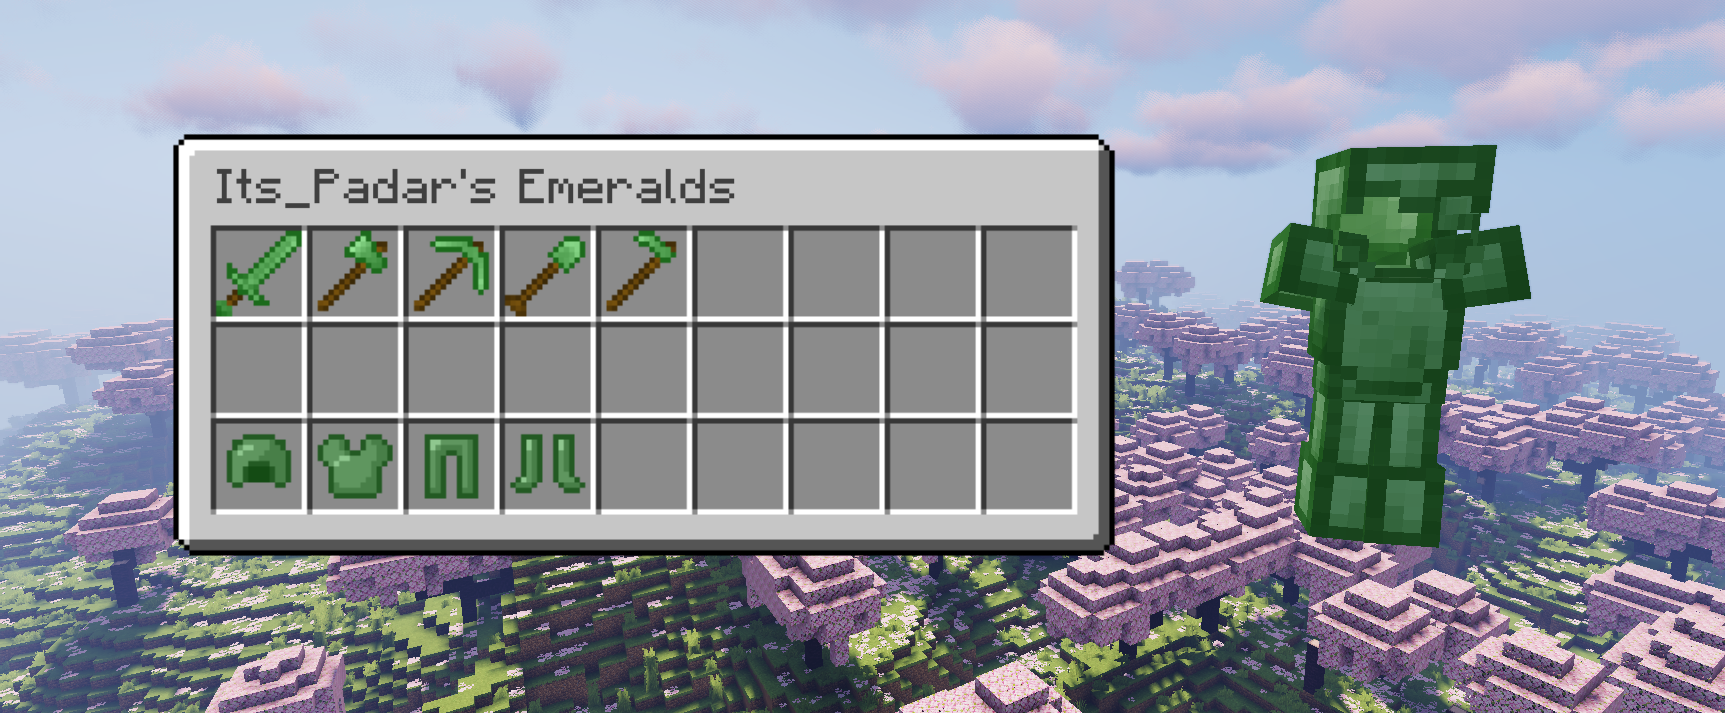 Its_Padar's Emeralds